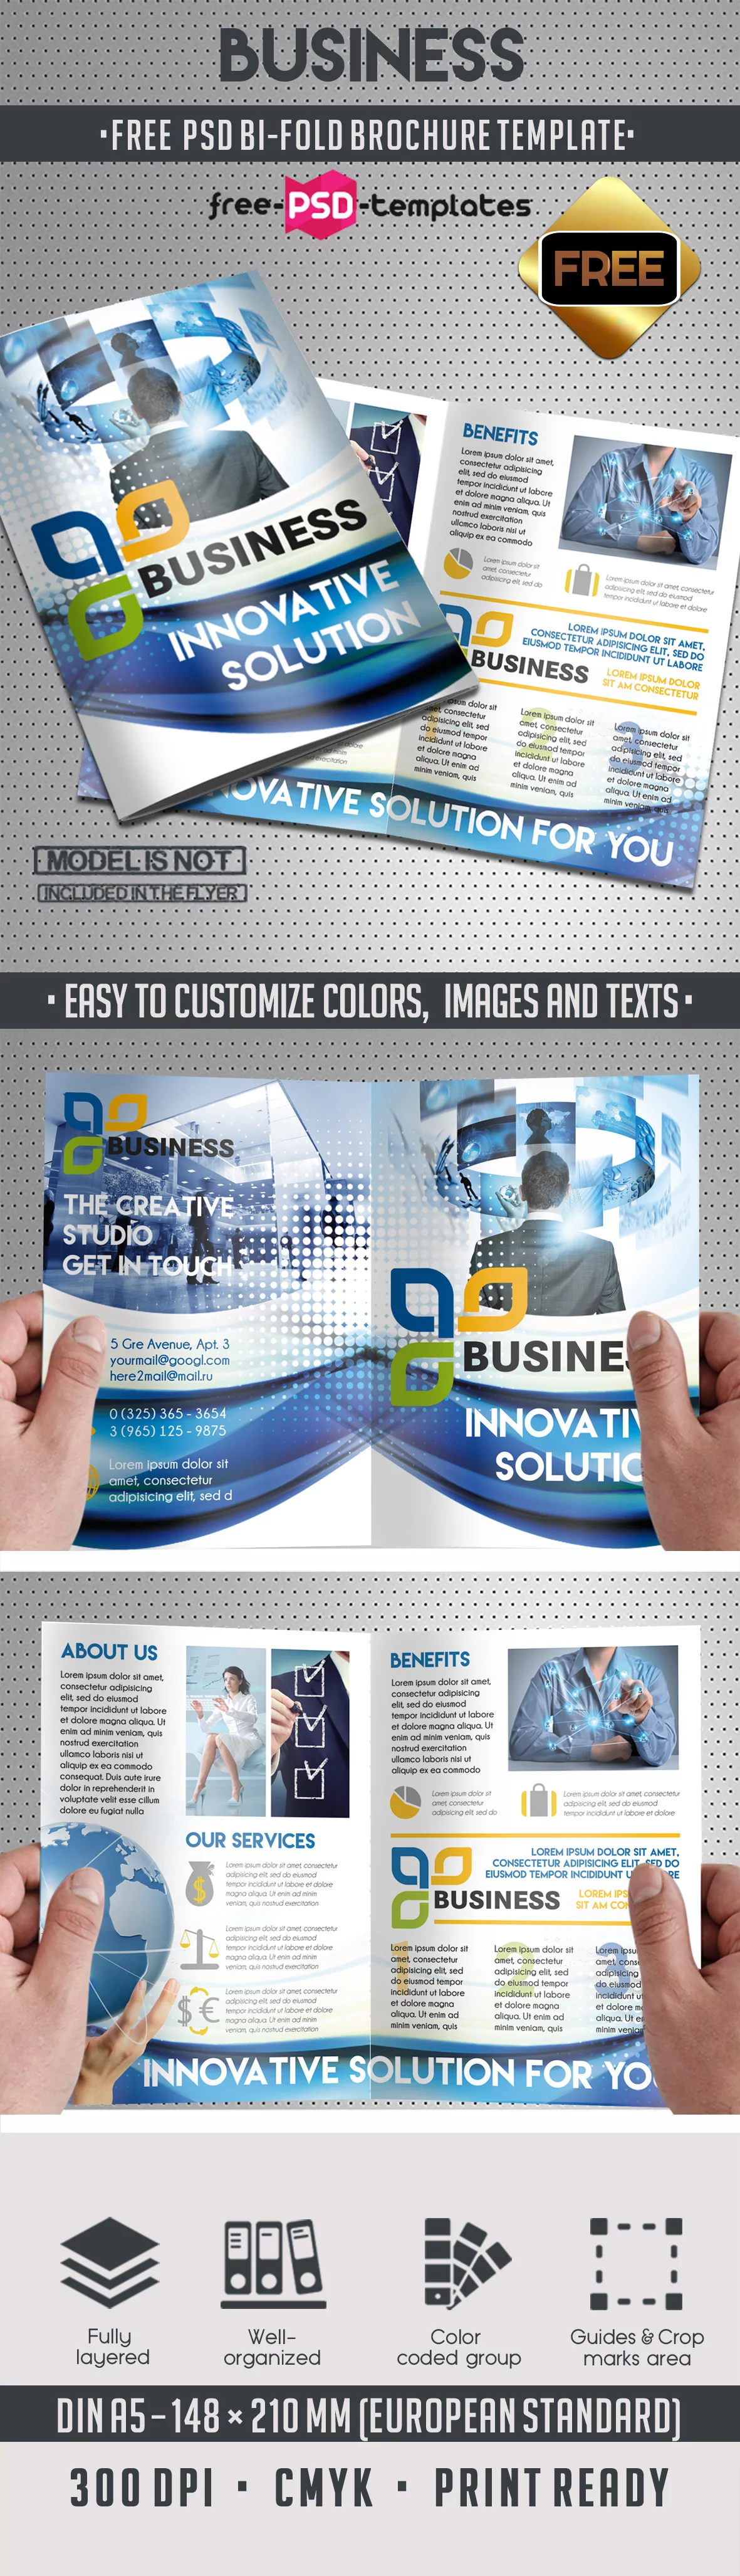 Bigpreview_free-corporate-business-psd-bi-fold-brochure